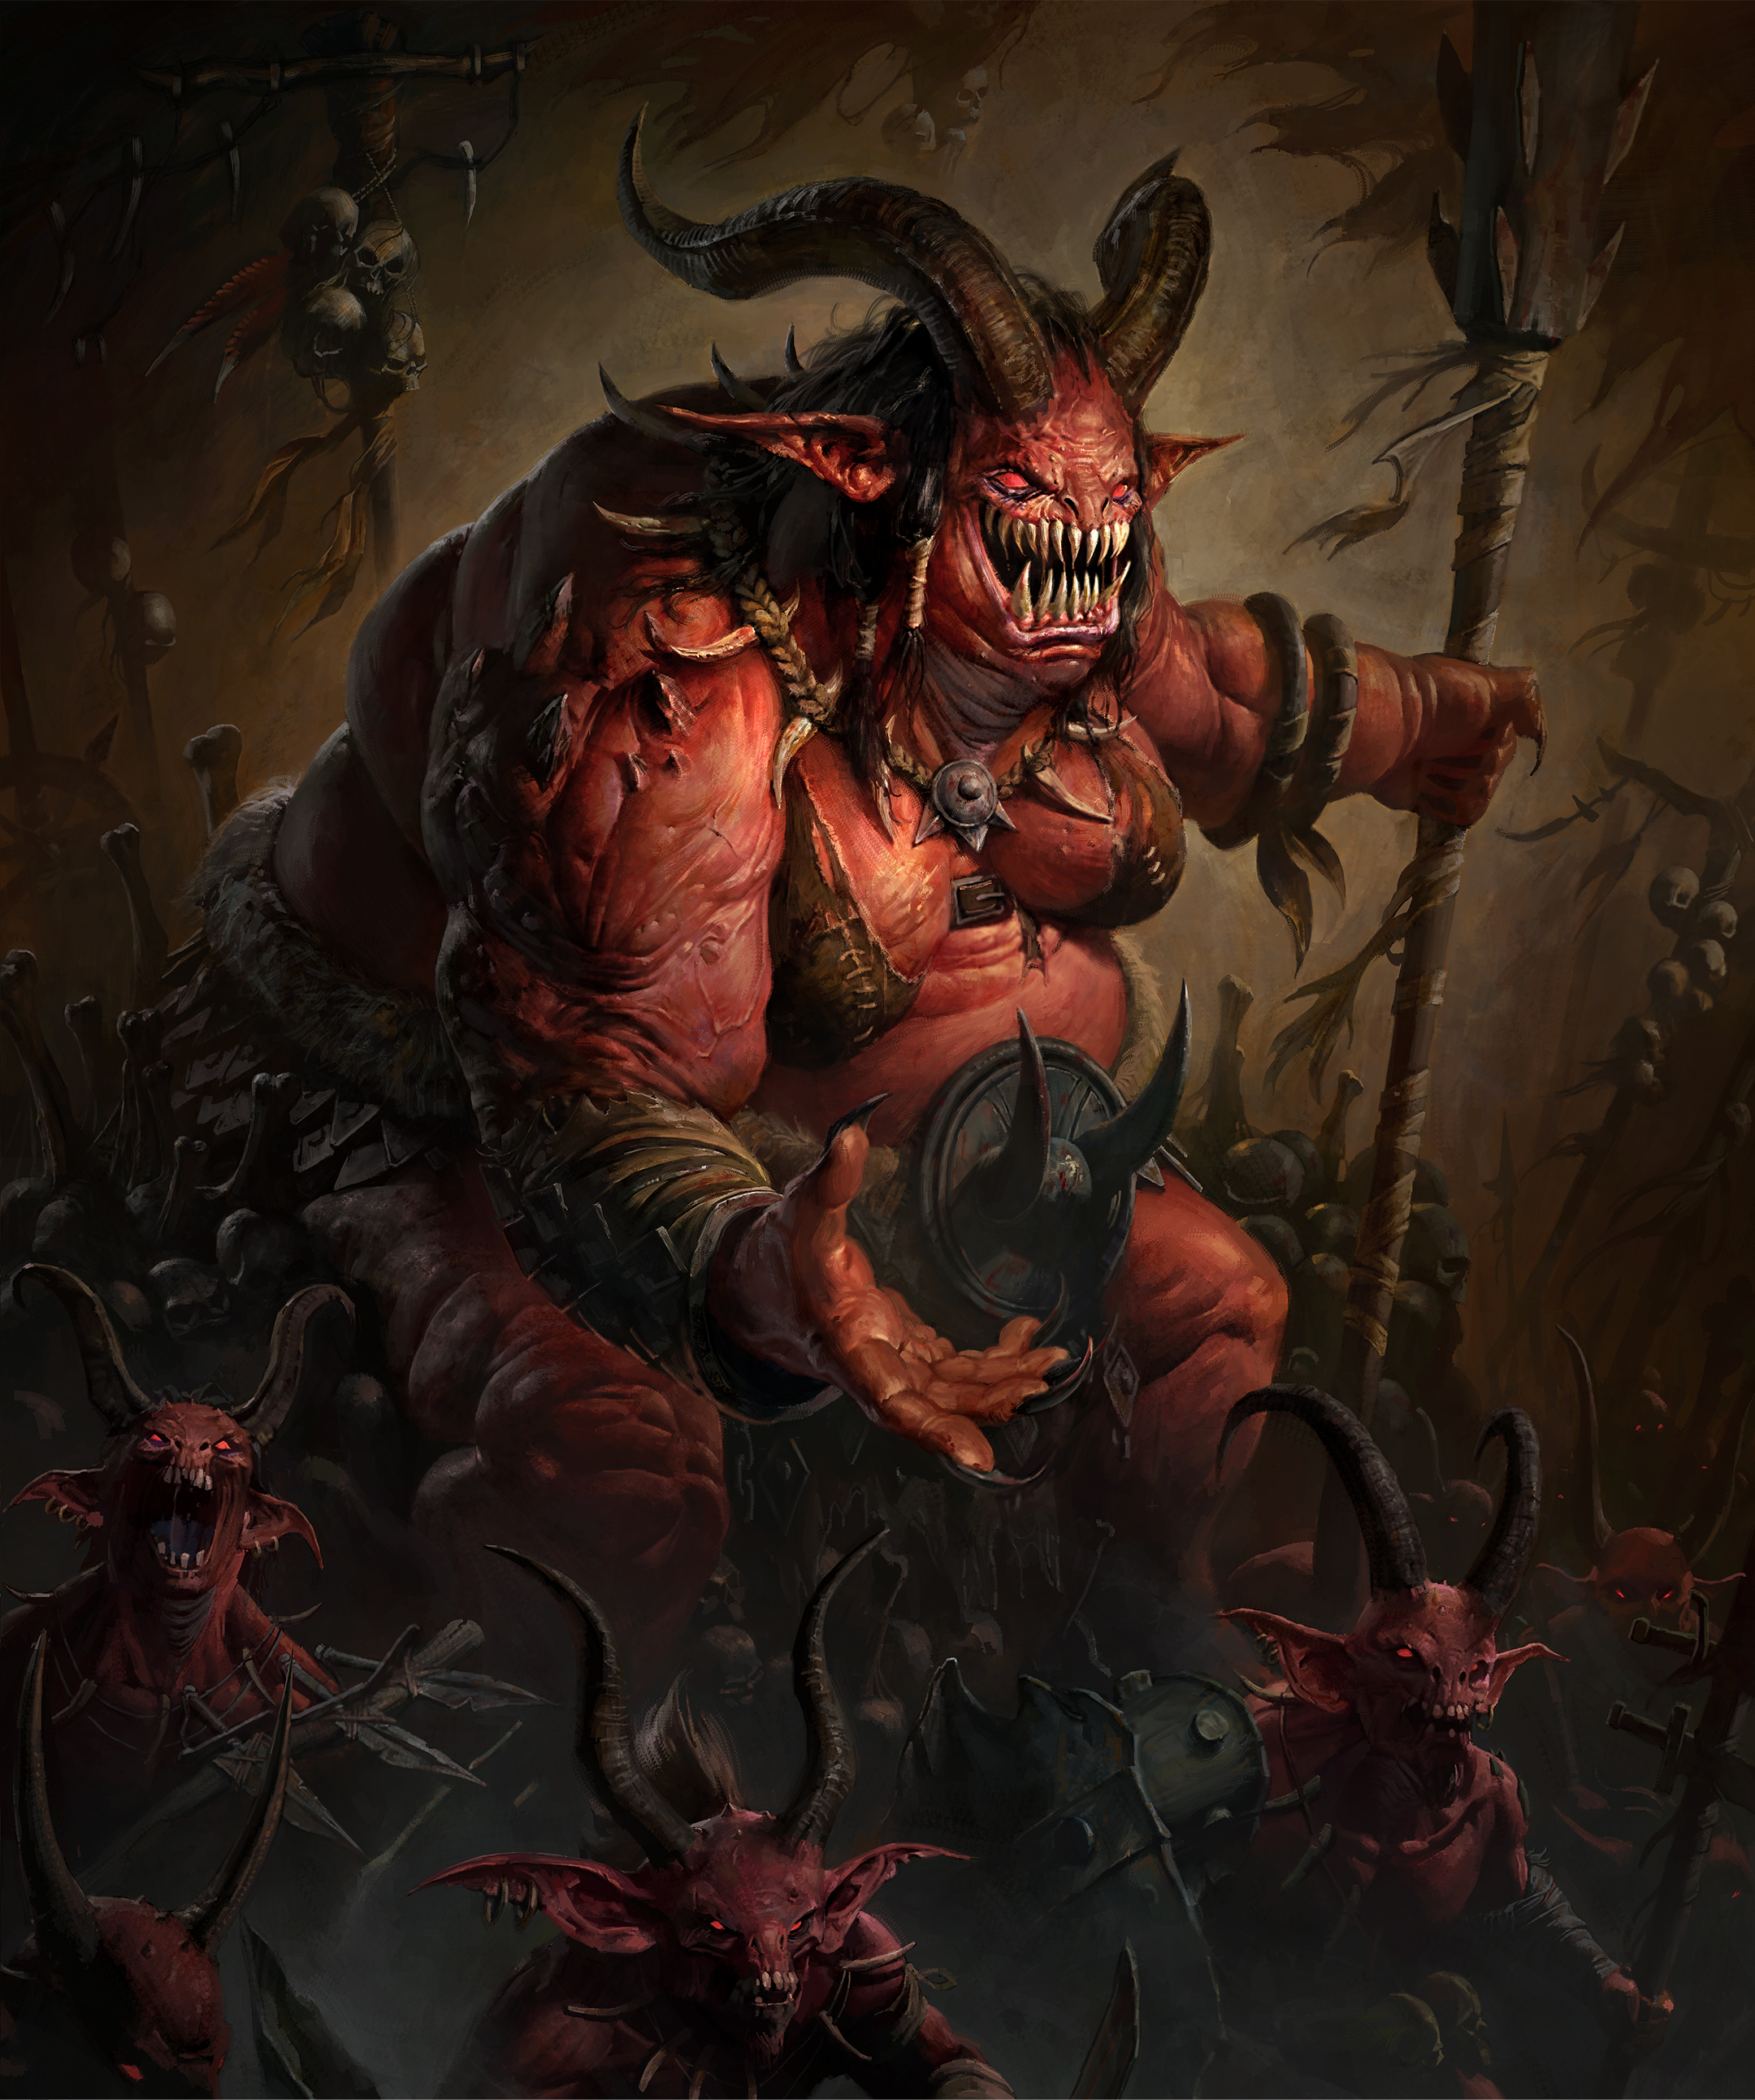 General 2160x2585 Diablo Diablo Immortal creature horns boobs red eyes video games PC gaming fantasy art